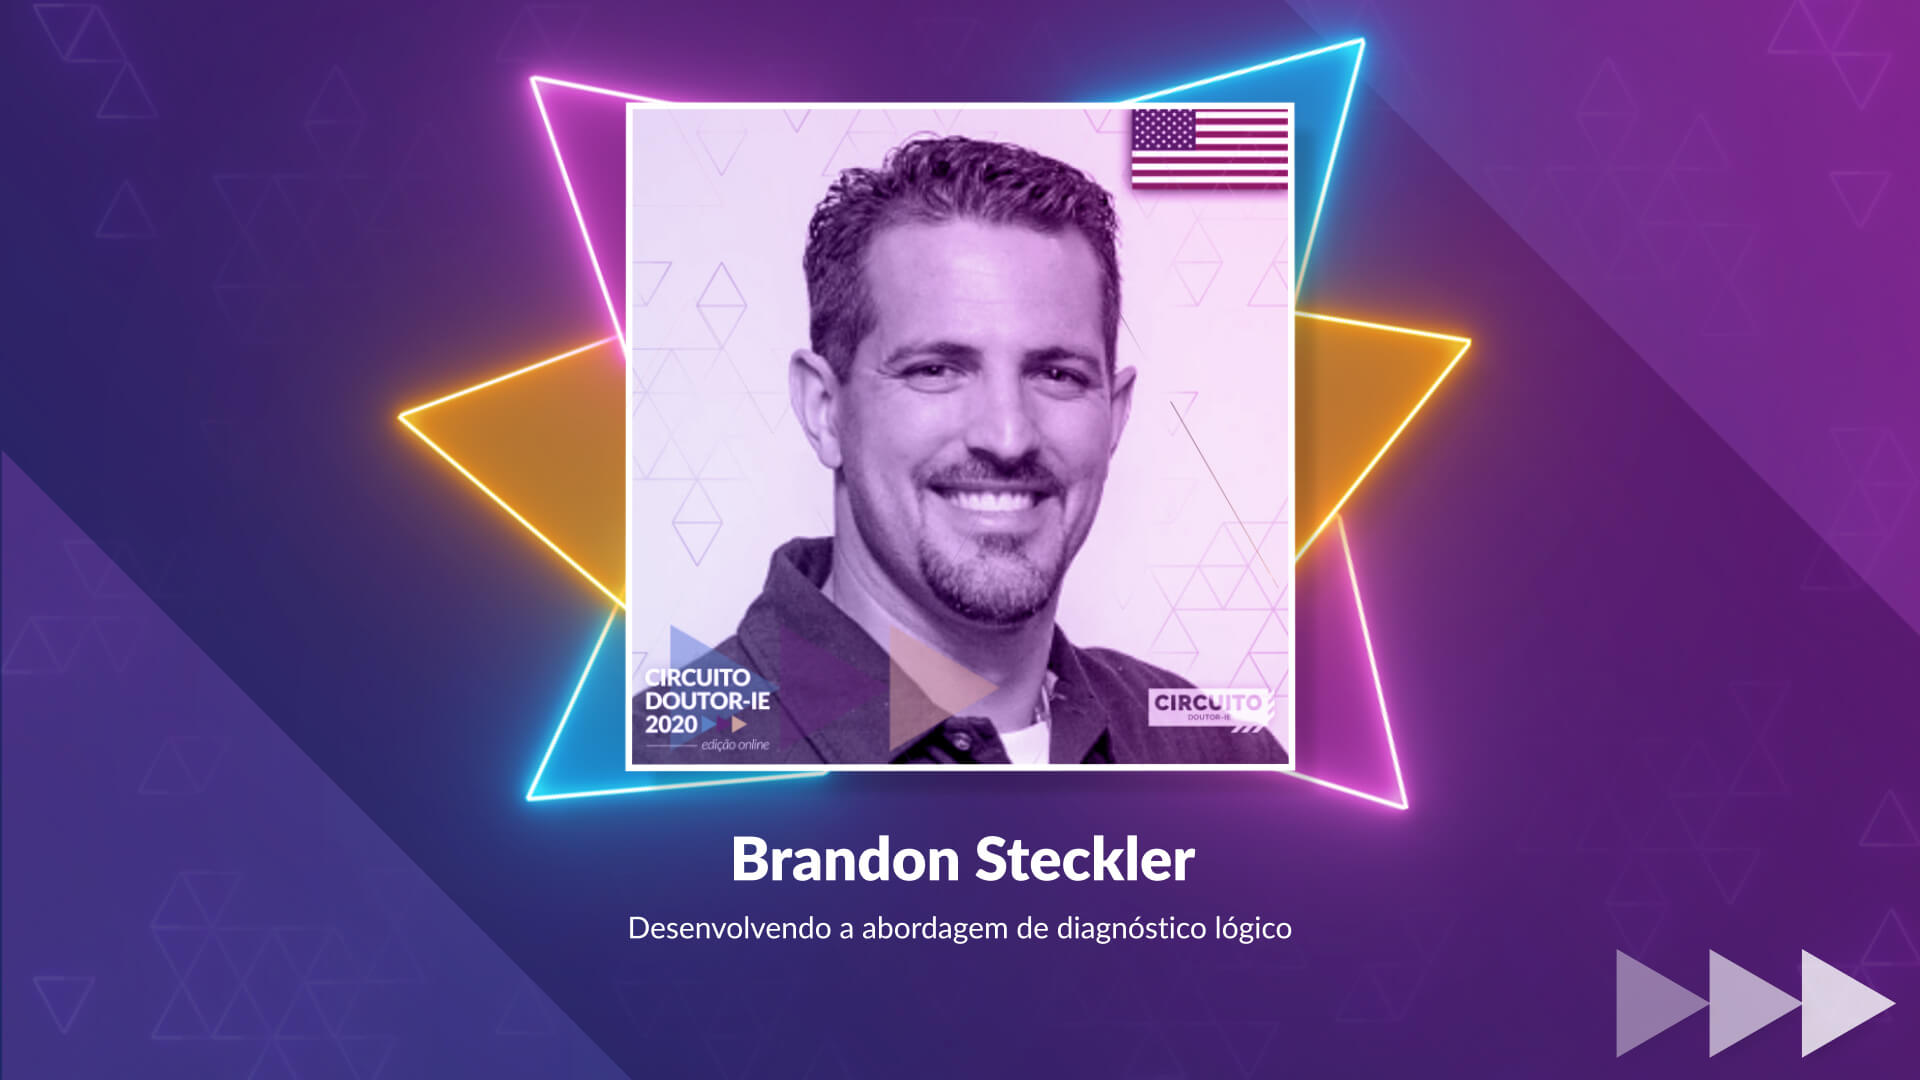 Circuito Doutor-IE 2020 edição online - palestrante Brandon Steckler